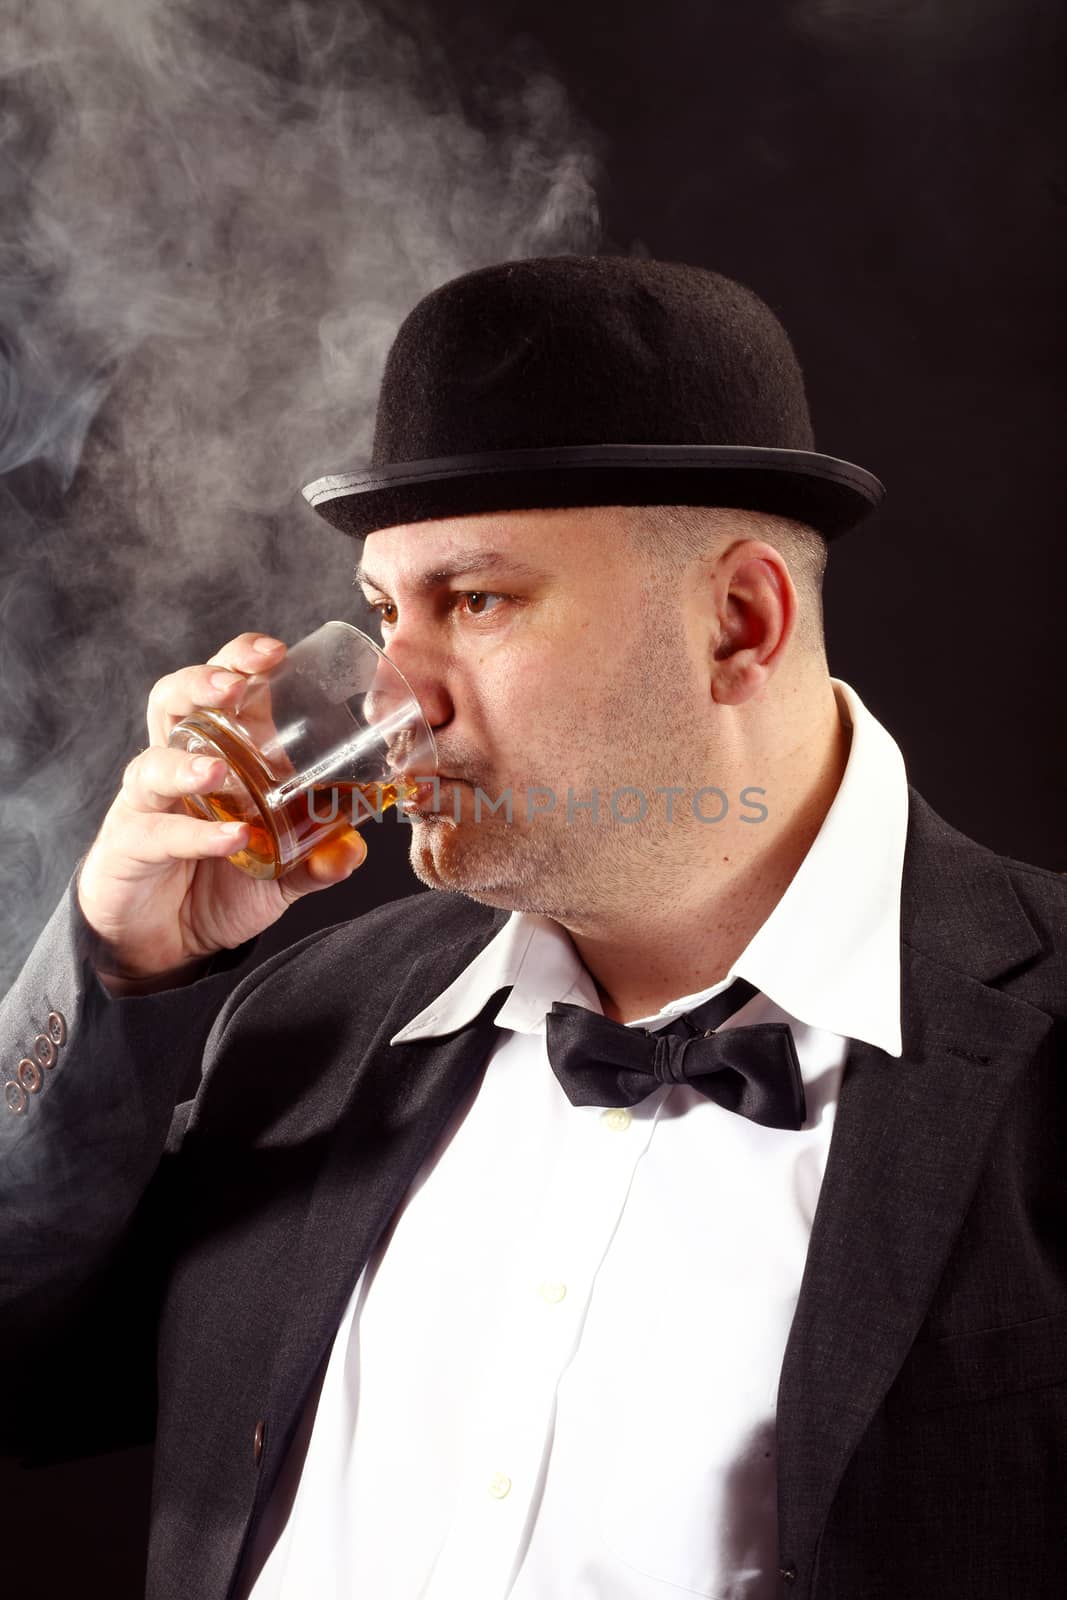 whiskey drinker by alexkosev